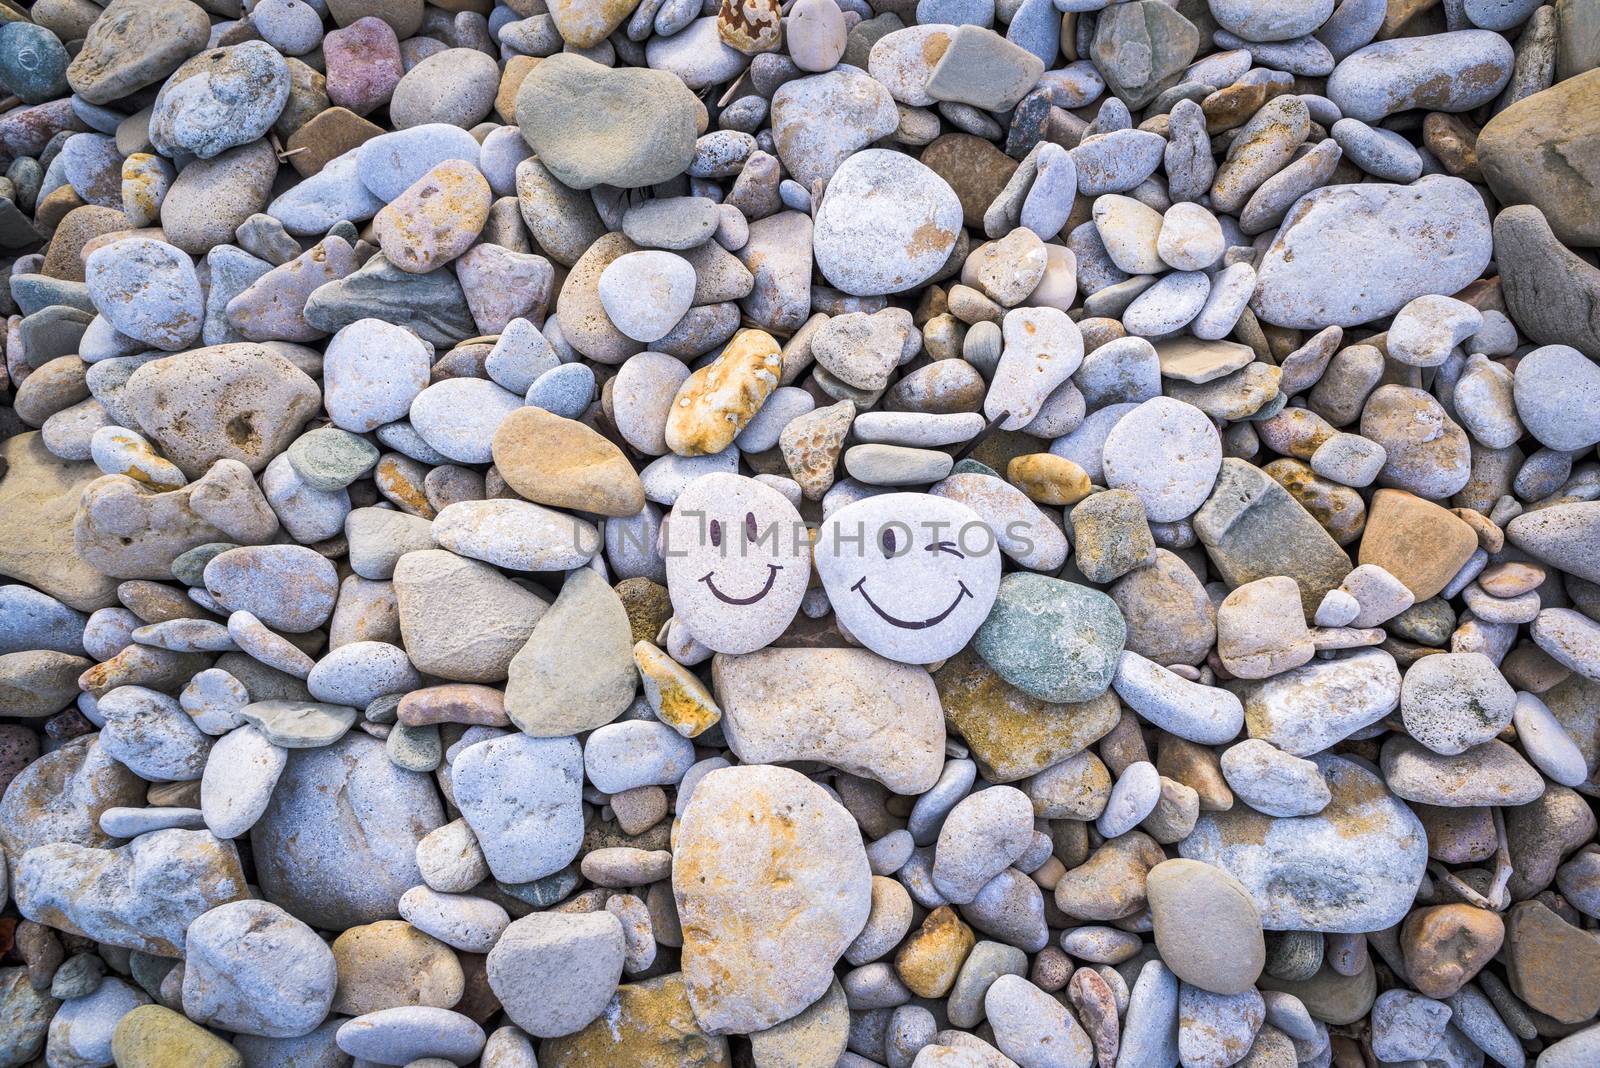 Emoticons on pebbles on the seashore